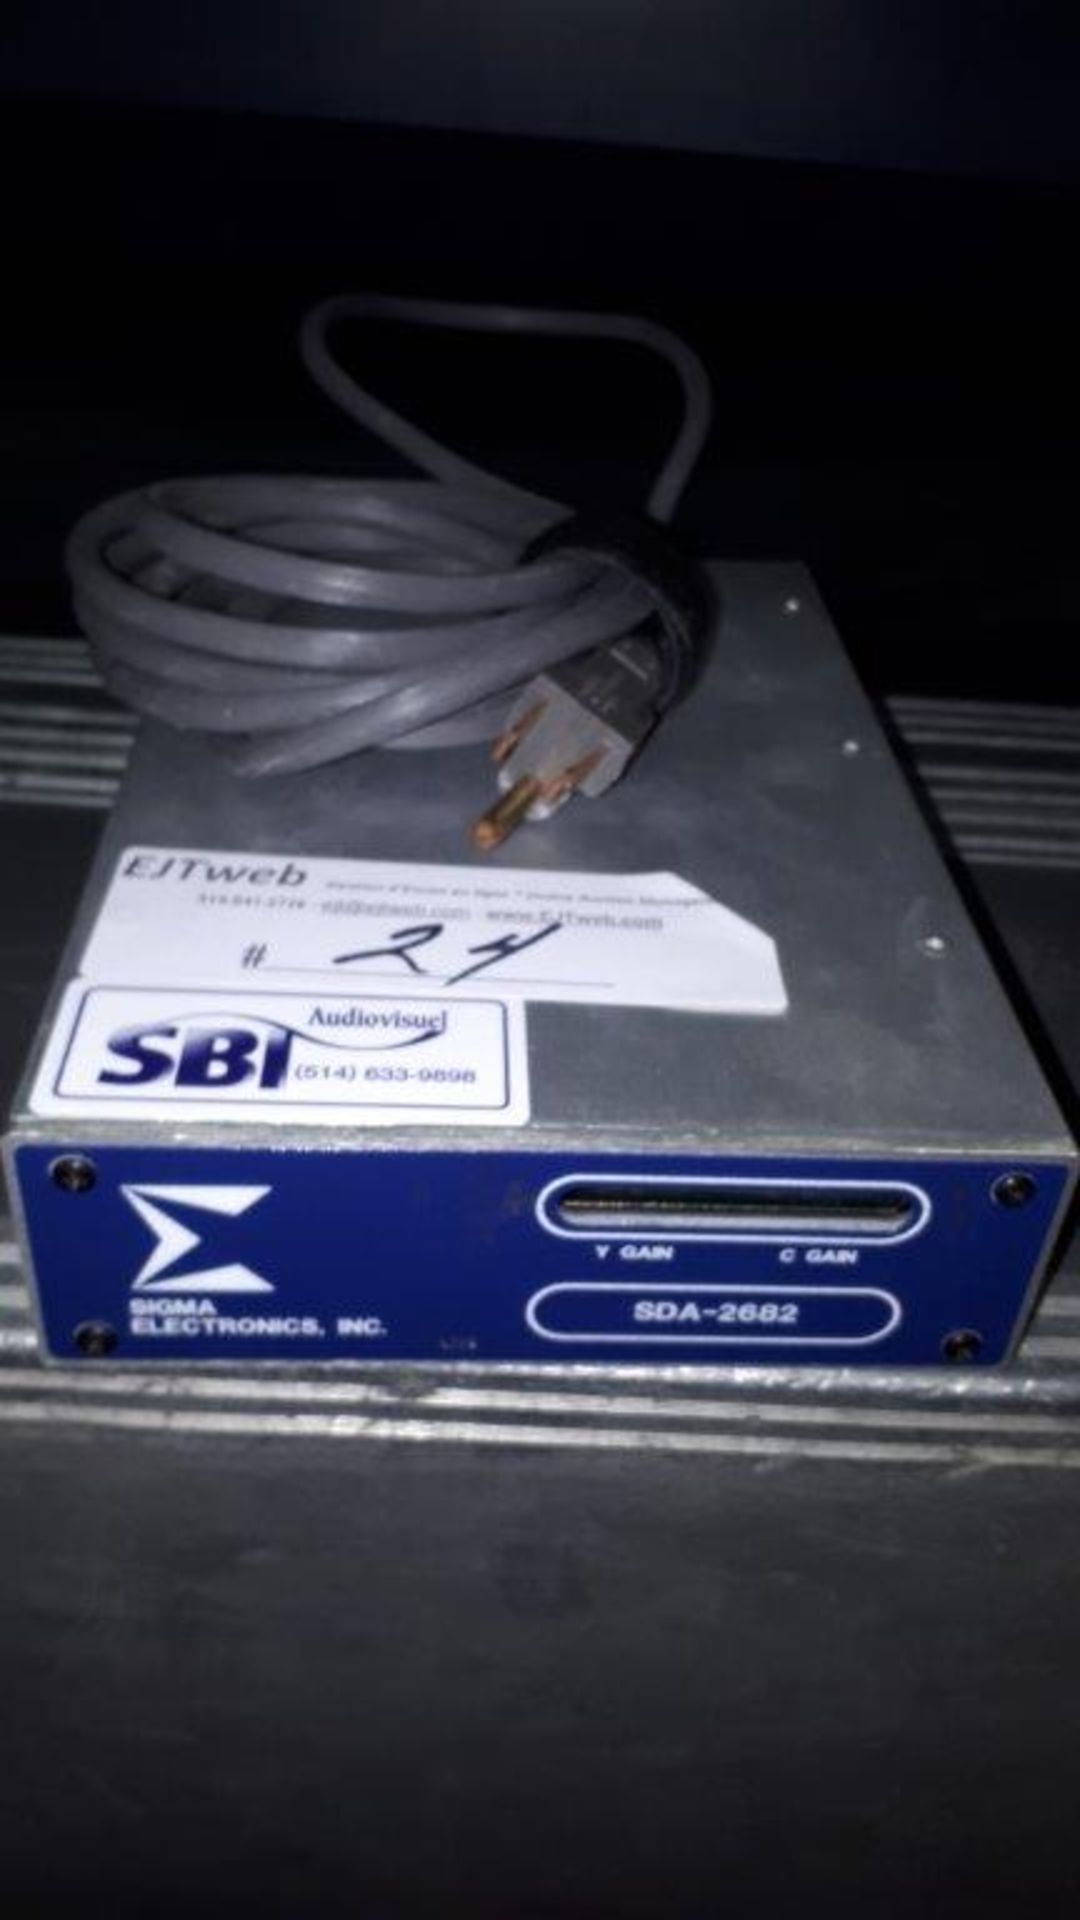 Ampli de signal YC Sigma SDA-2682 + Coffre pour ampli de distribution YC